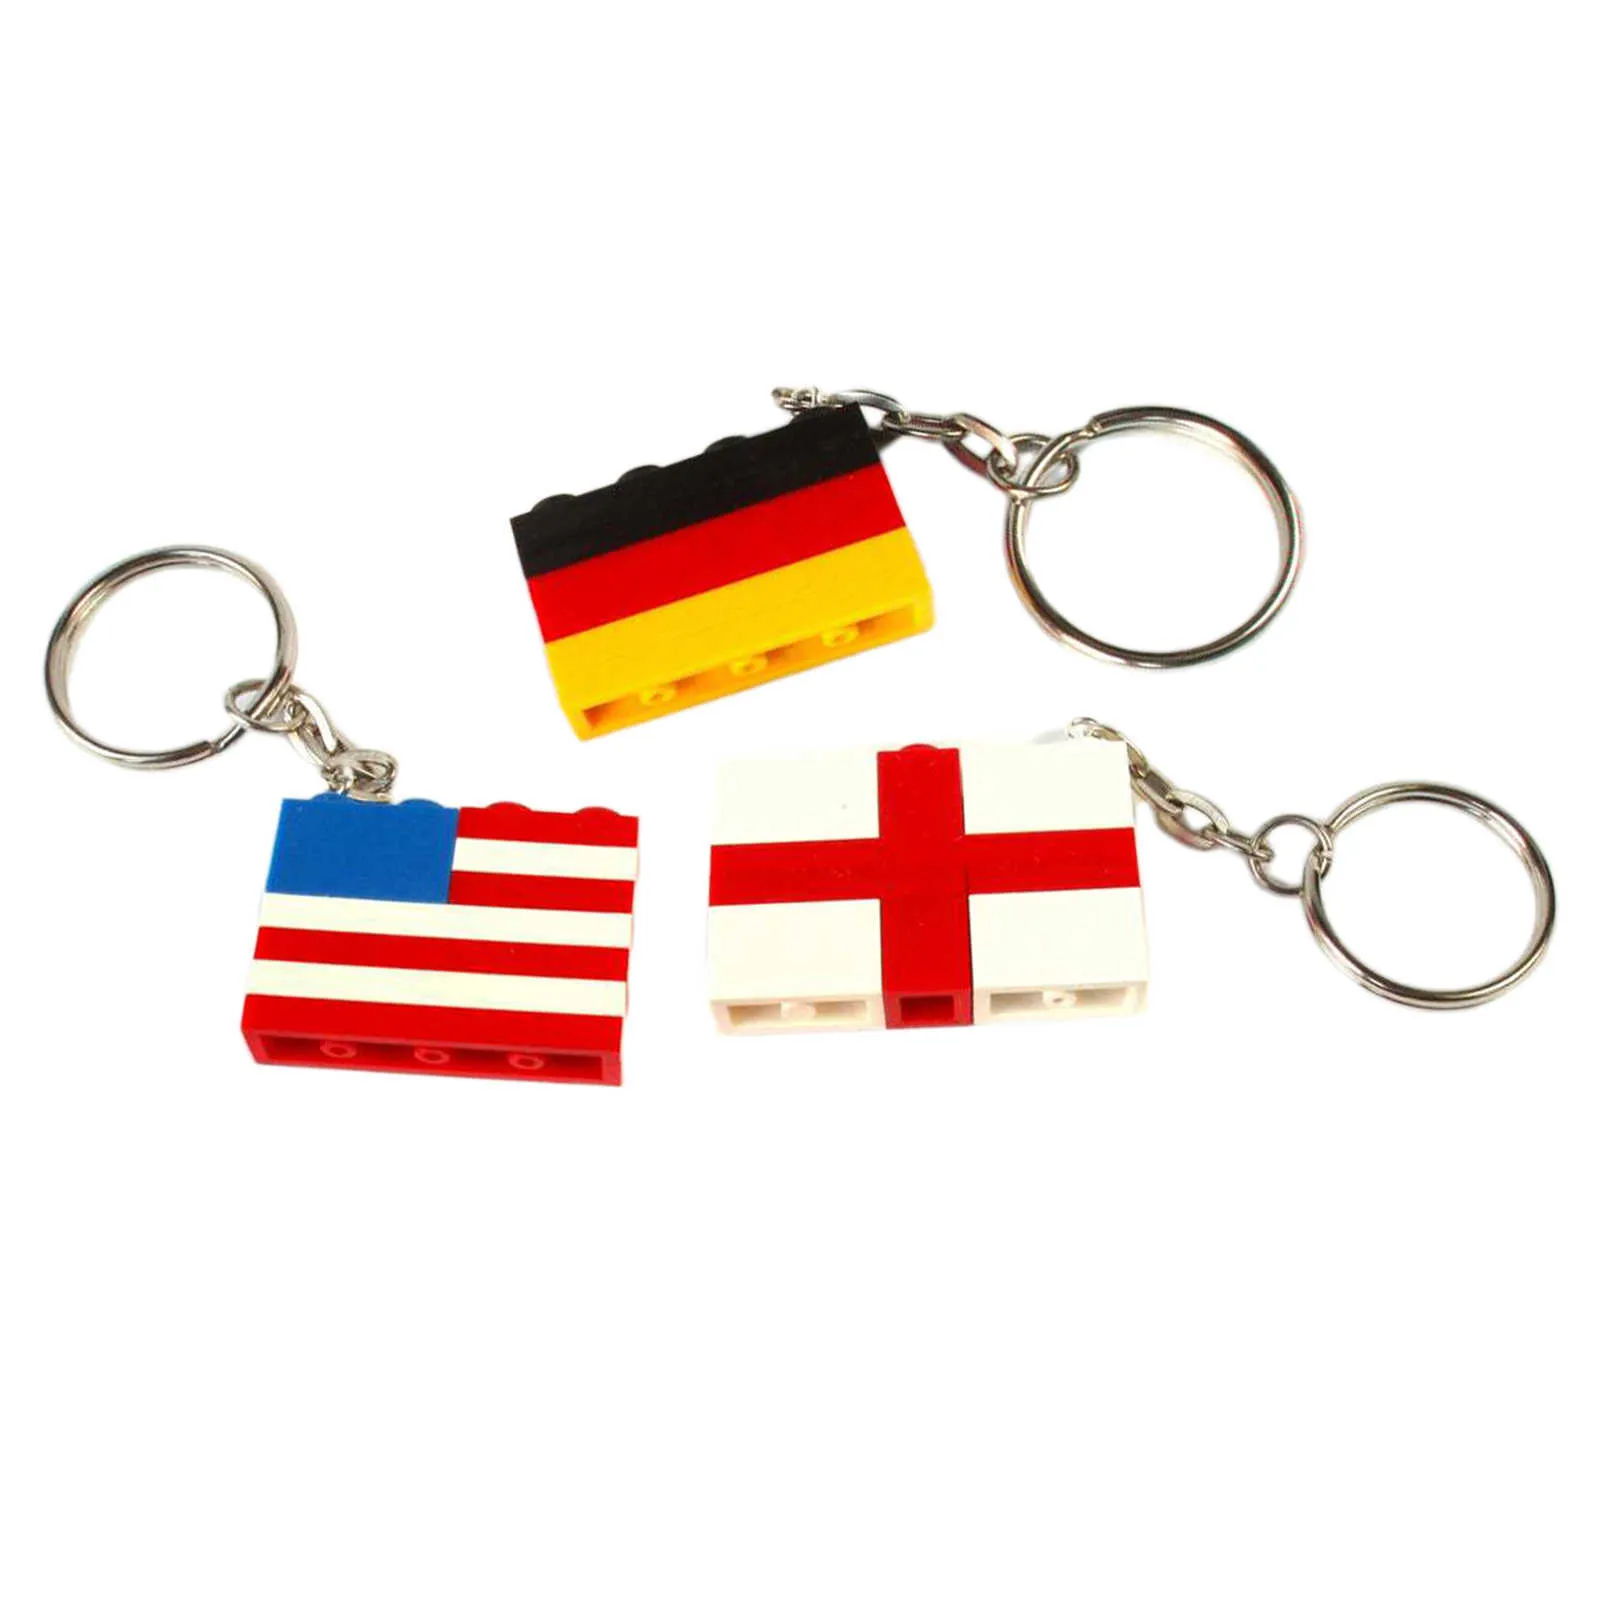 3 Pieces Miniature Pendant Charm National Flag Keyring Key Ring Key Chain Novelty Souvenir Gift For Kids Teens